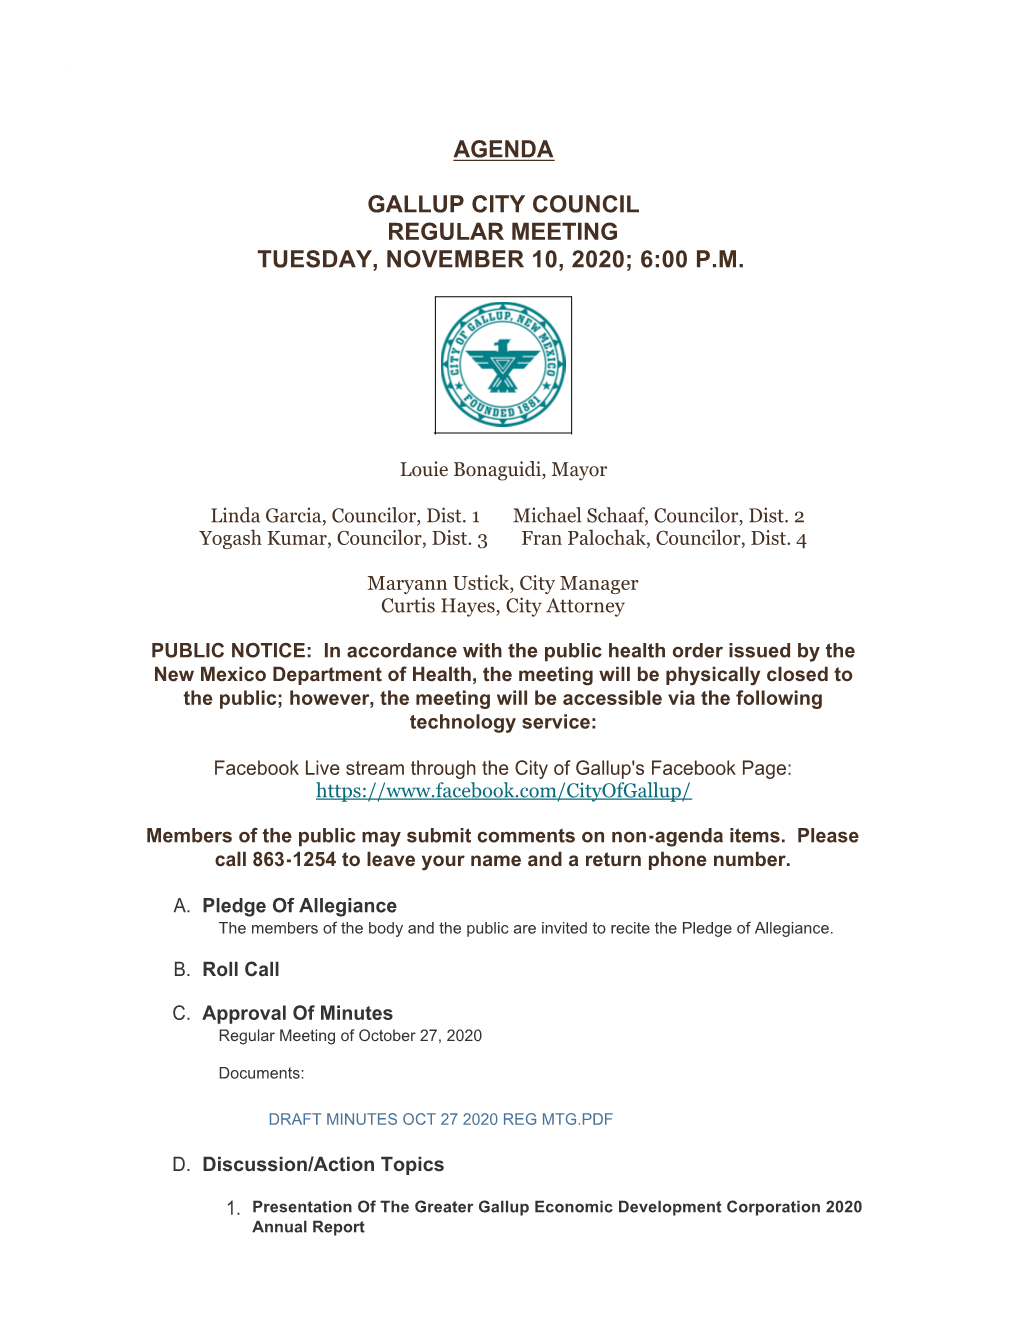 Agenda Gallup City Council Regular Meeting Tuesday, November 10, 2020; 6:00 P.M